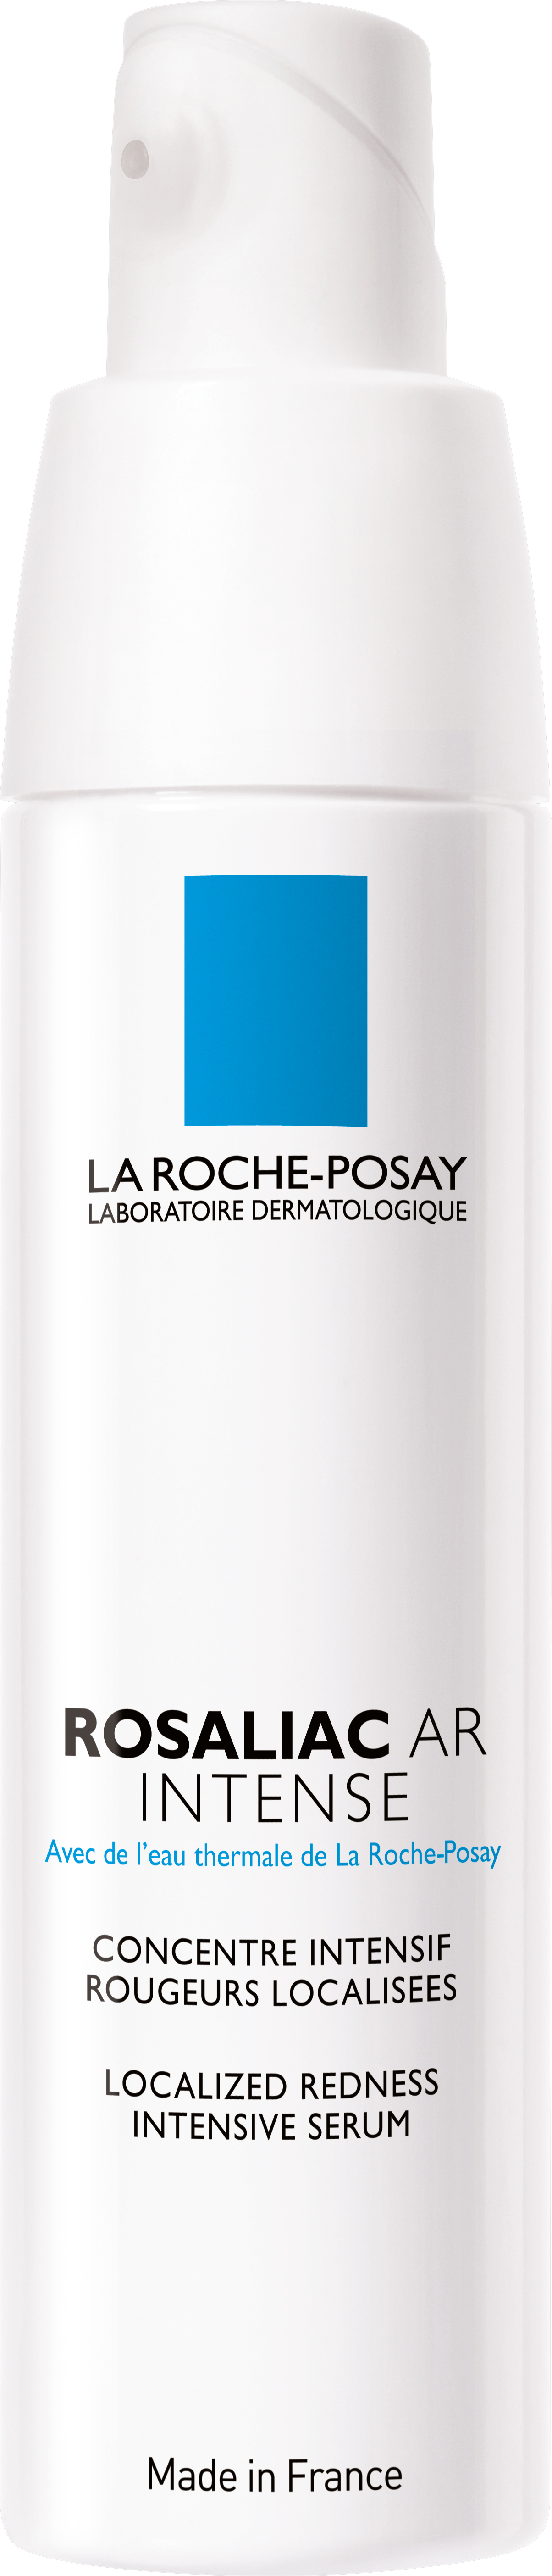 La Roche-Posay Rosaliac AR Intense Redness Intensive Serum 40 ml